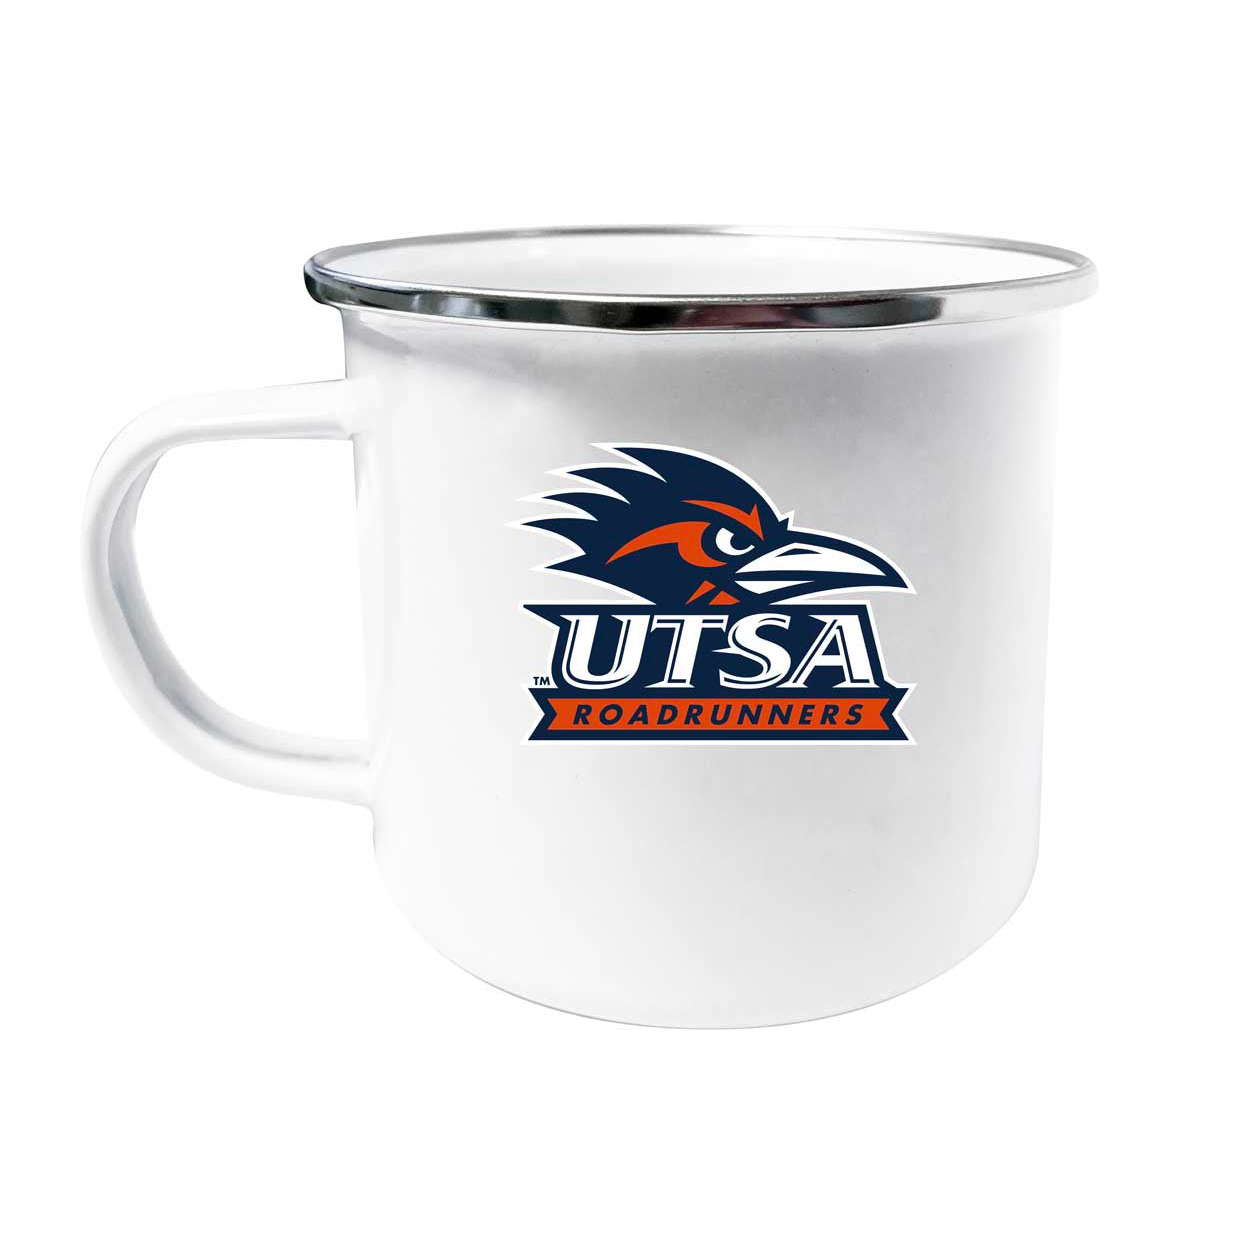 UTSA Road Runners Tin Camper Coffee Mug - Choose Your Color - White